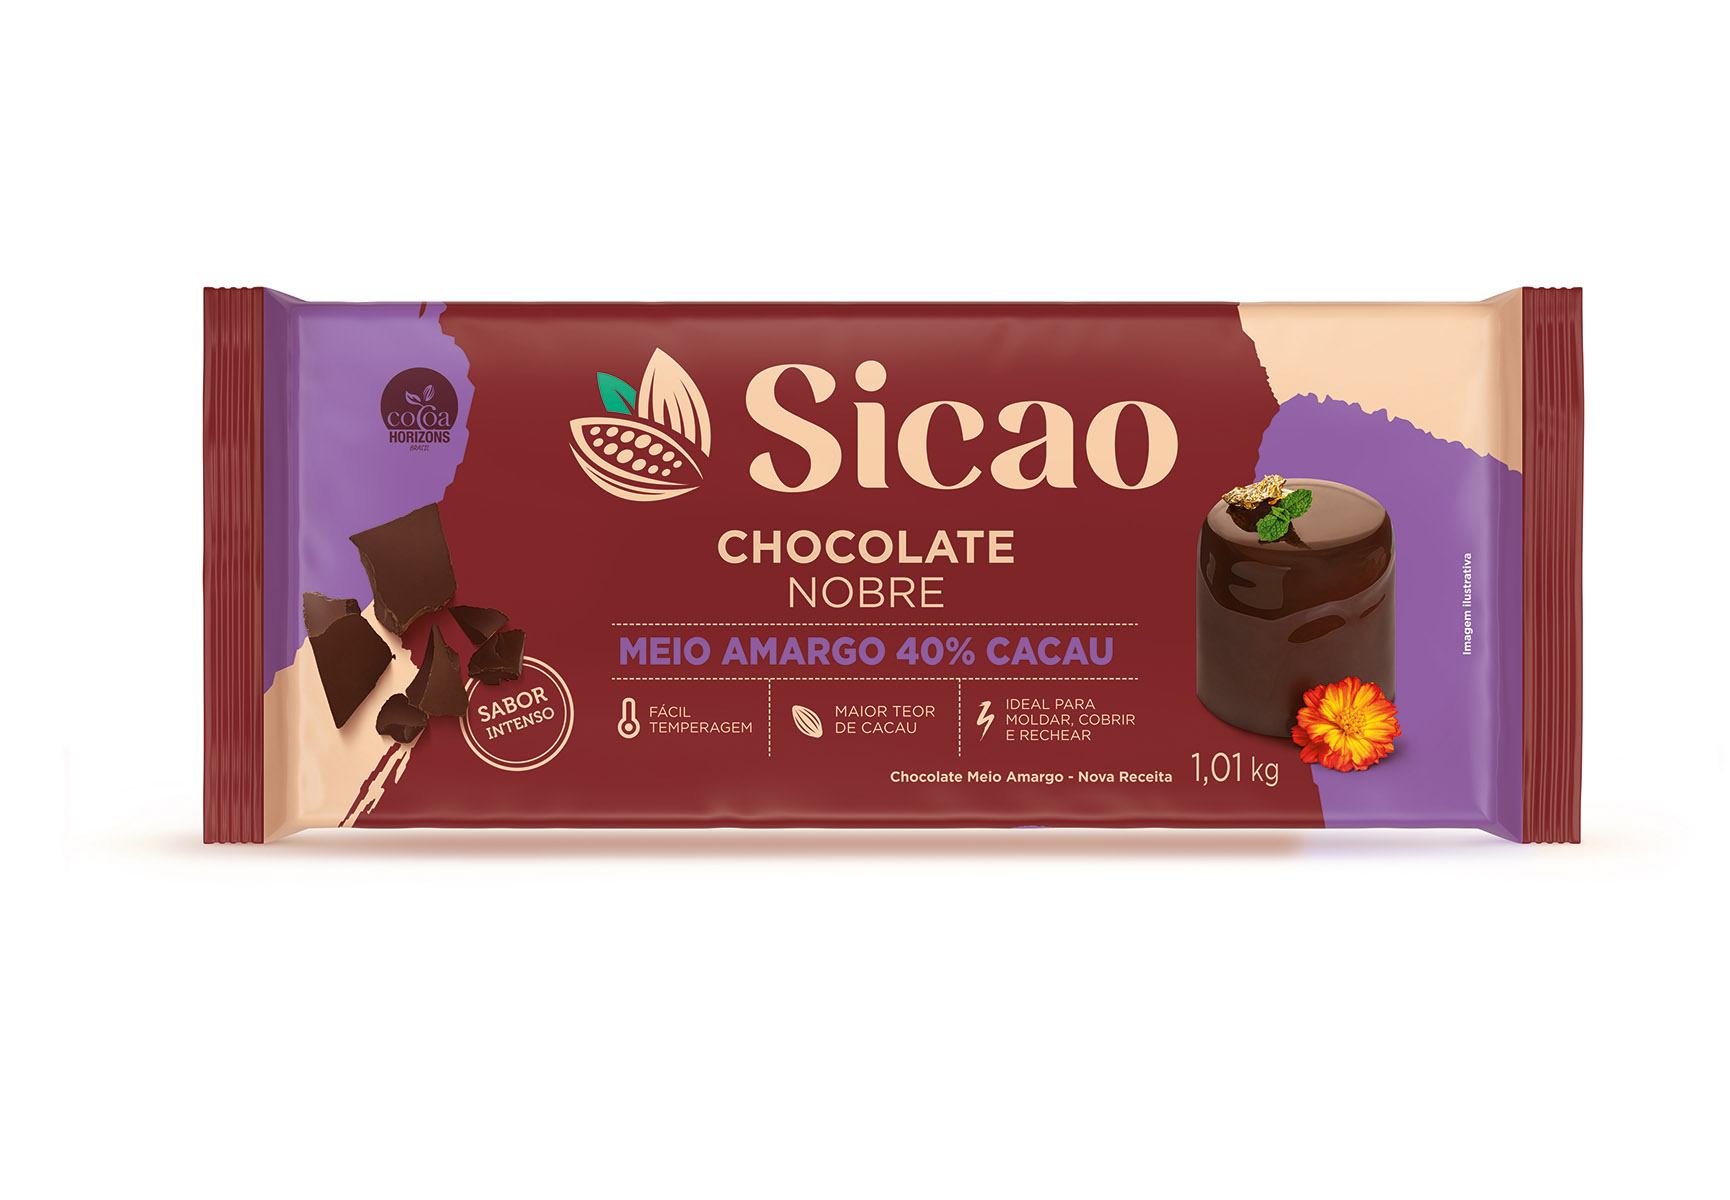 Chocolate Meio Amargo Sicao Nobre - Barra 1,01 kg (1)